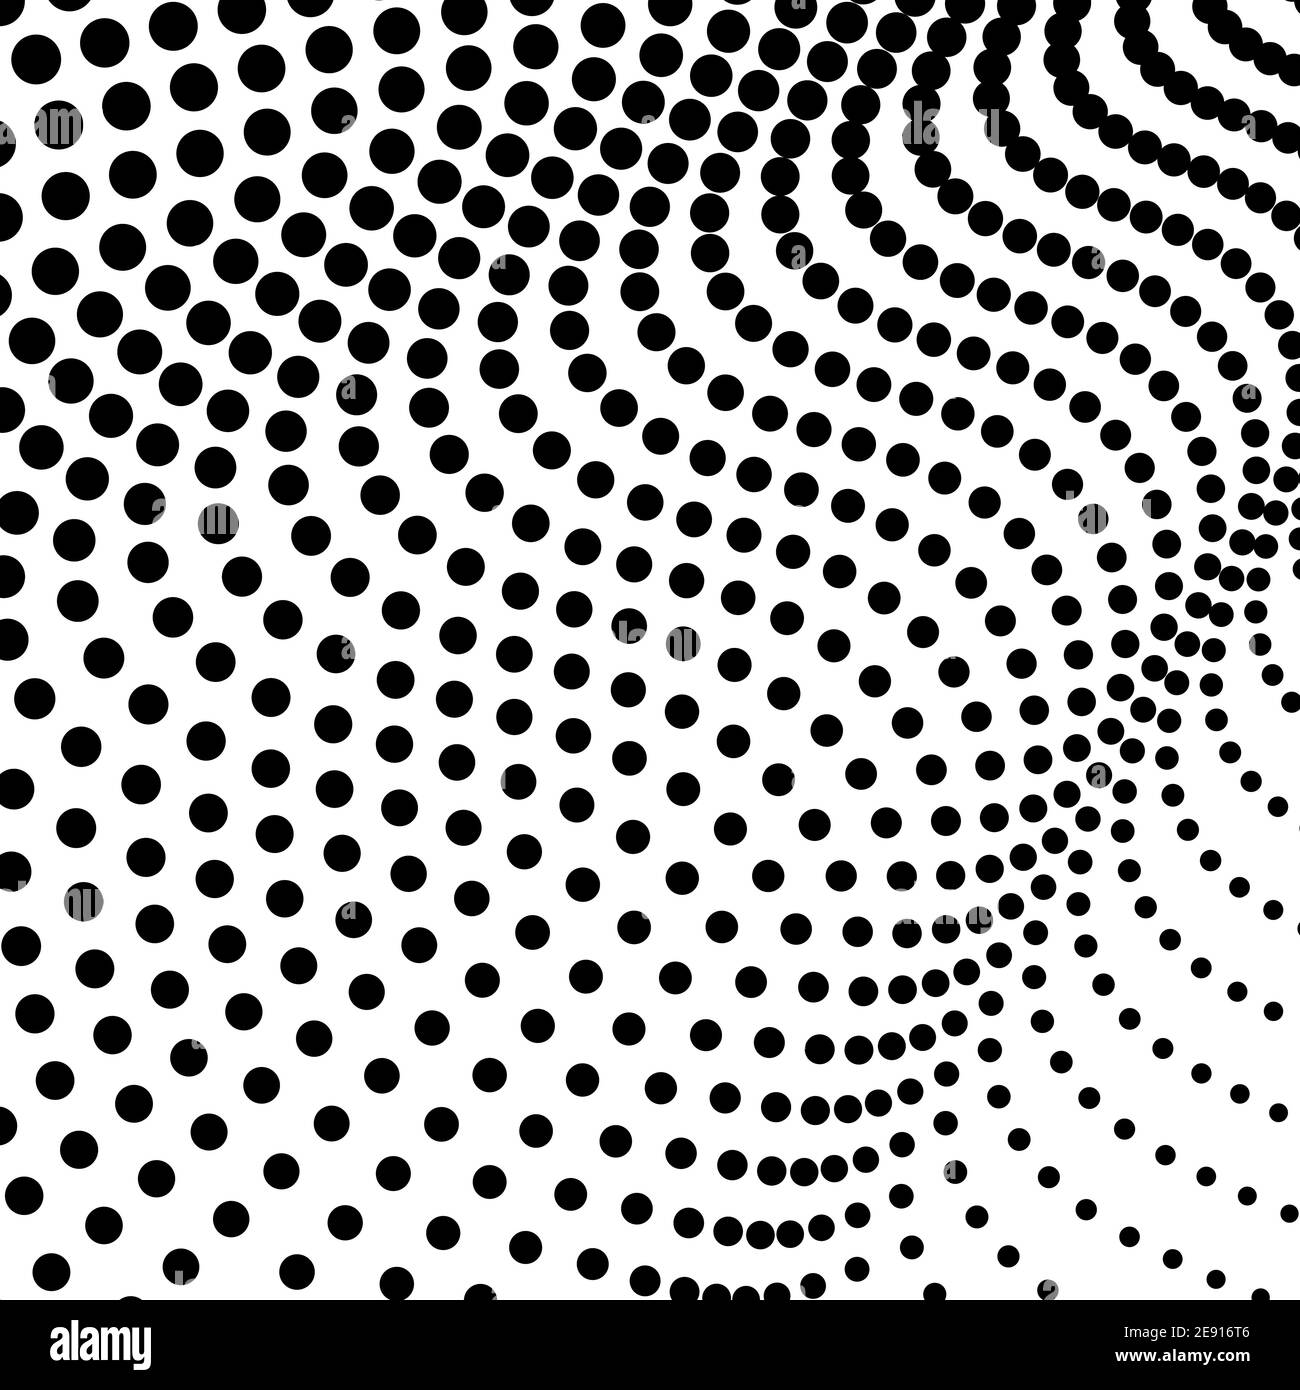 Líneas punteadas negras, fondo blanco. Curva de moteado ondulado texturizada. Patrón de op art diagonal monocromo. Ondas vectoriales. Concepto abstracto de media tinta. EPS10 Ilustración del Vector